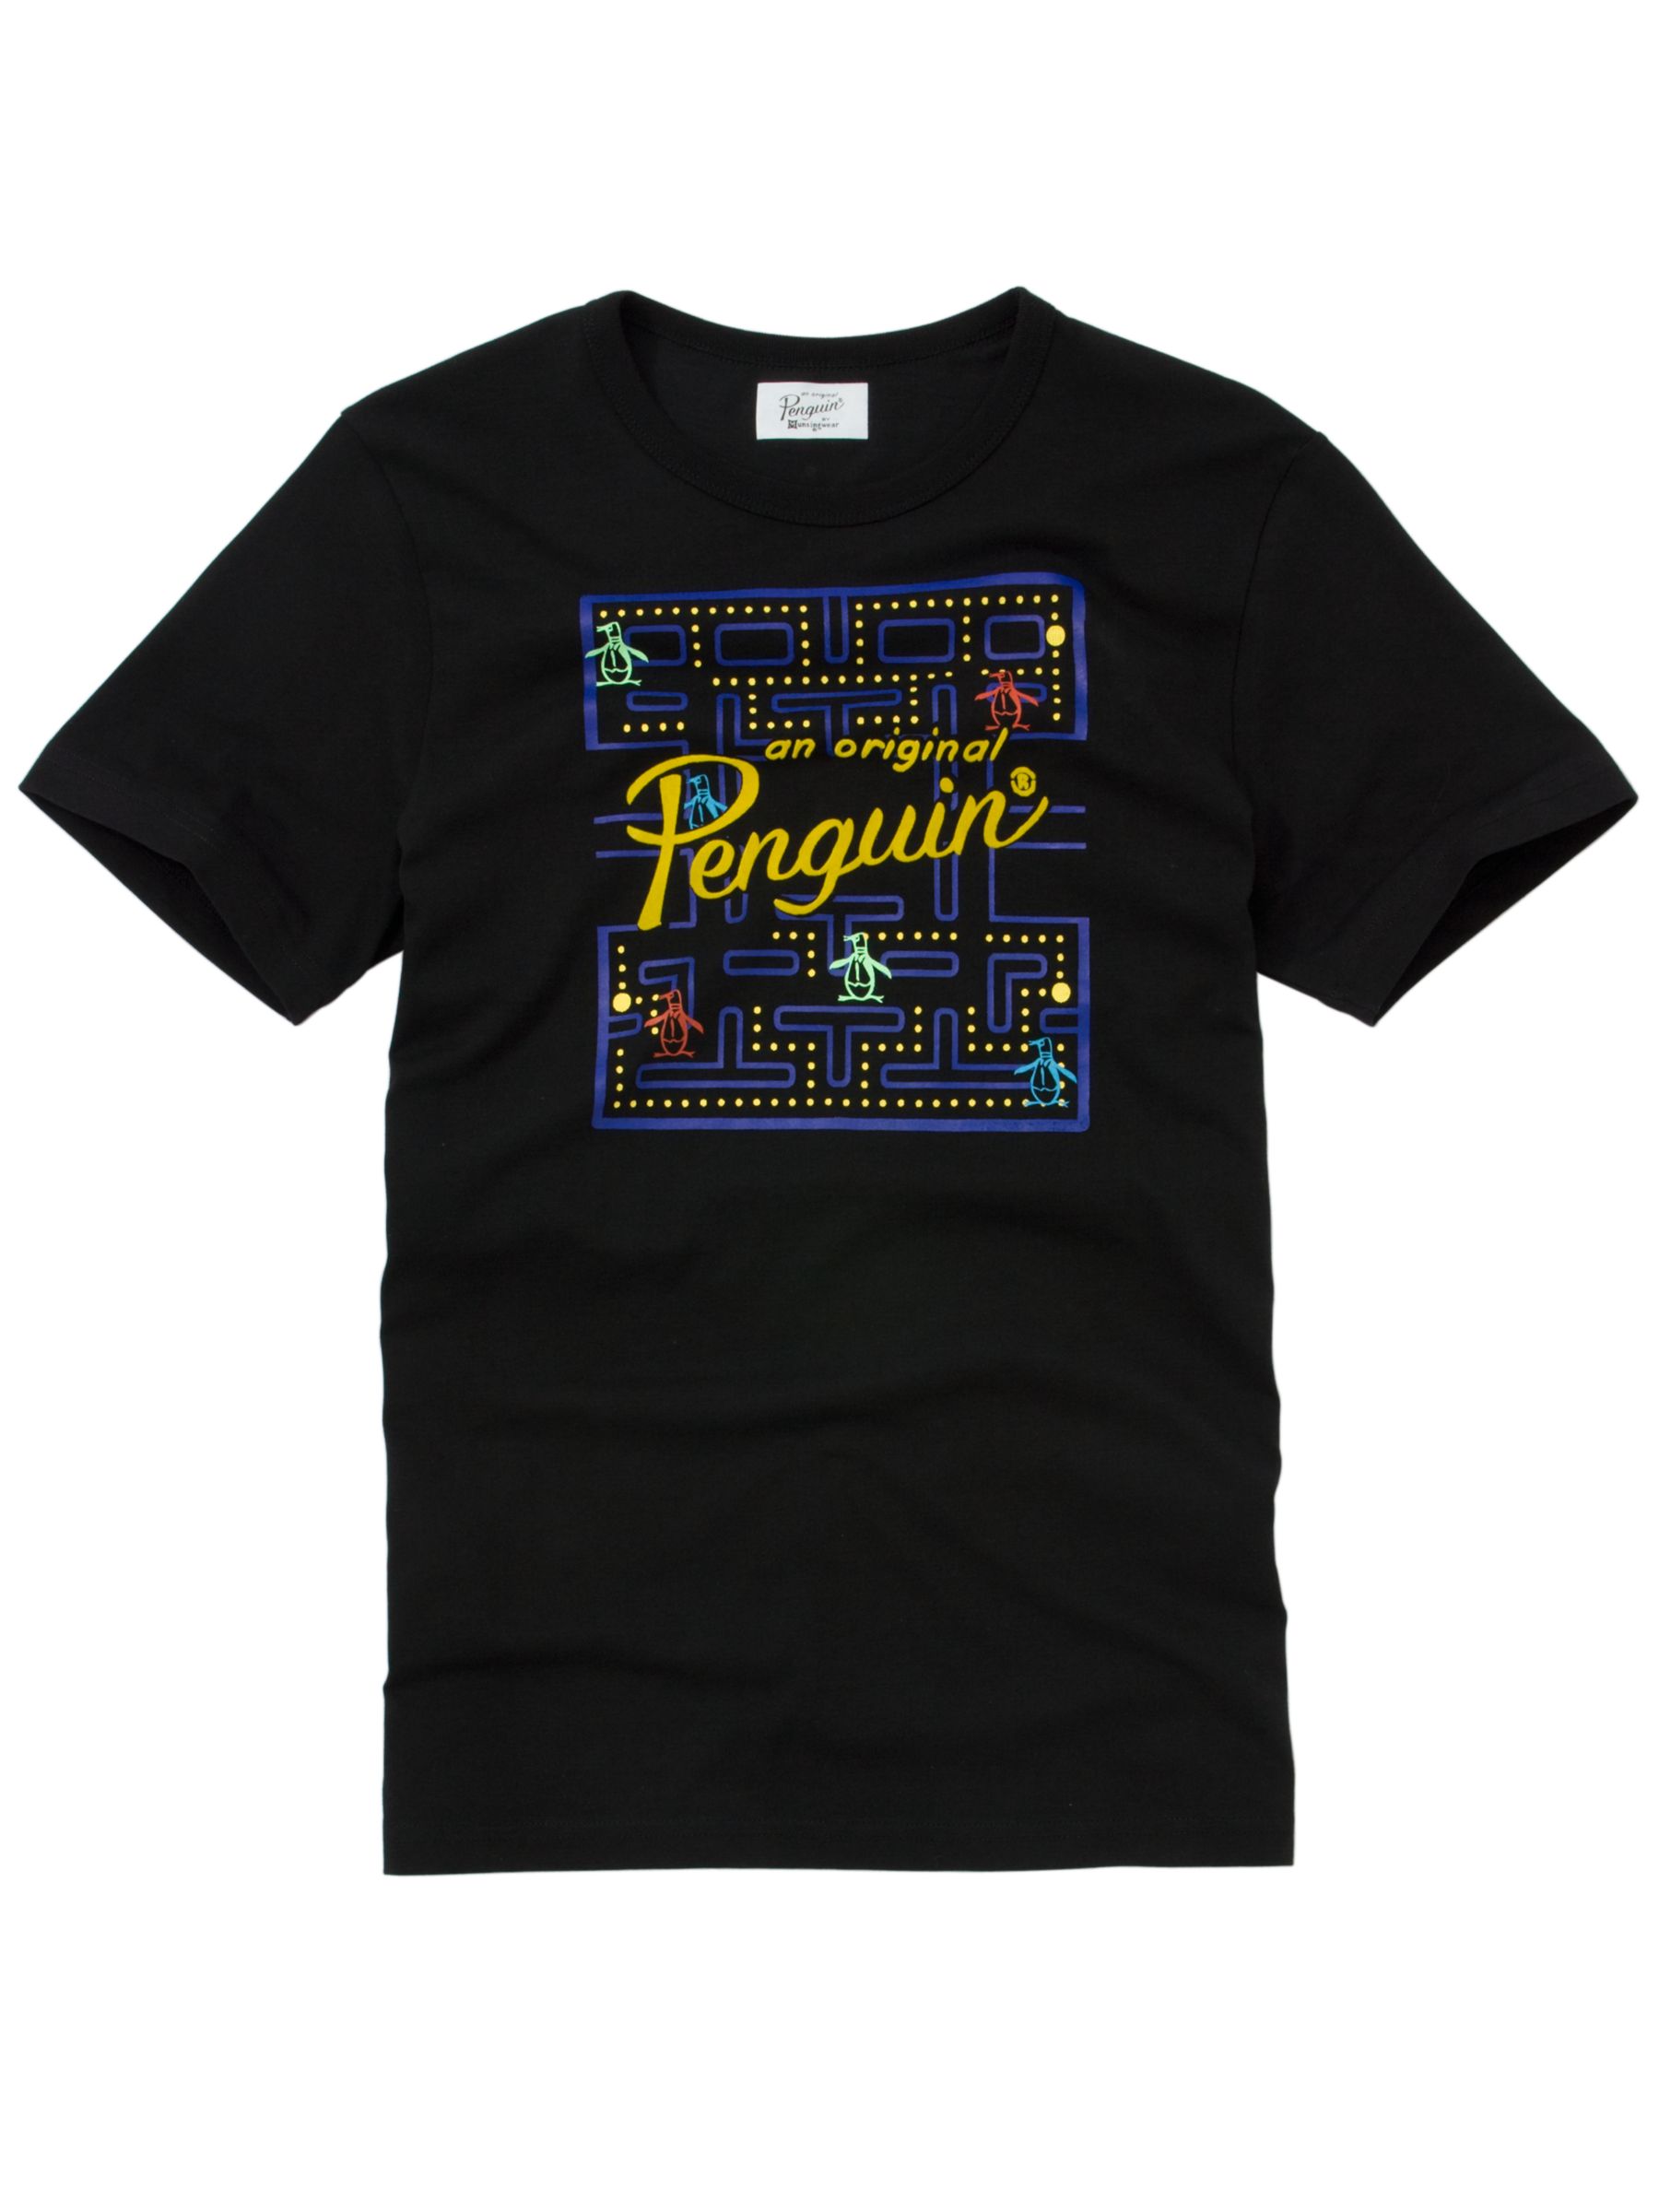 Penguin Original Penguin Packman T-Shirt, Black